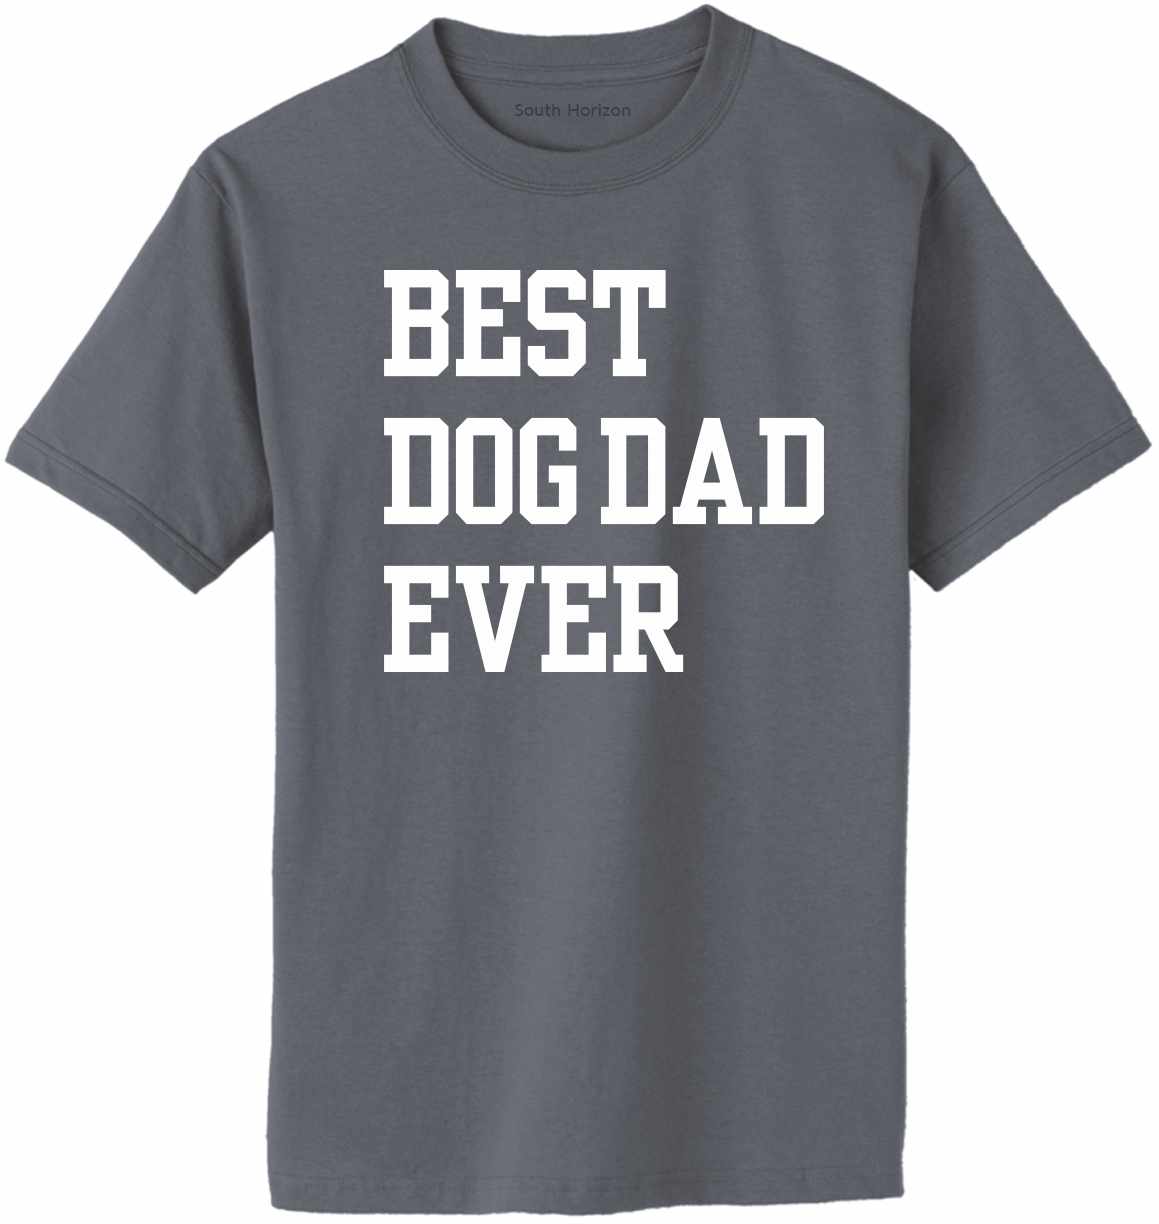 Best Dog Dad Ever Adult T-Shirt (#1091-1)